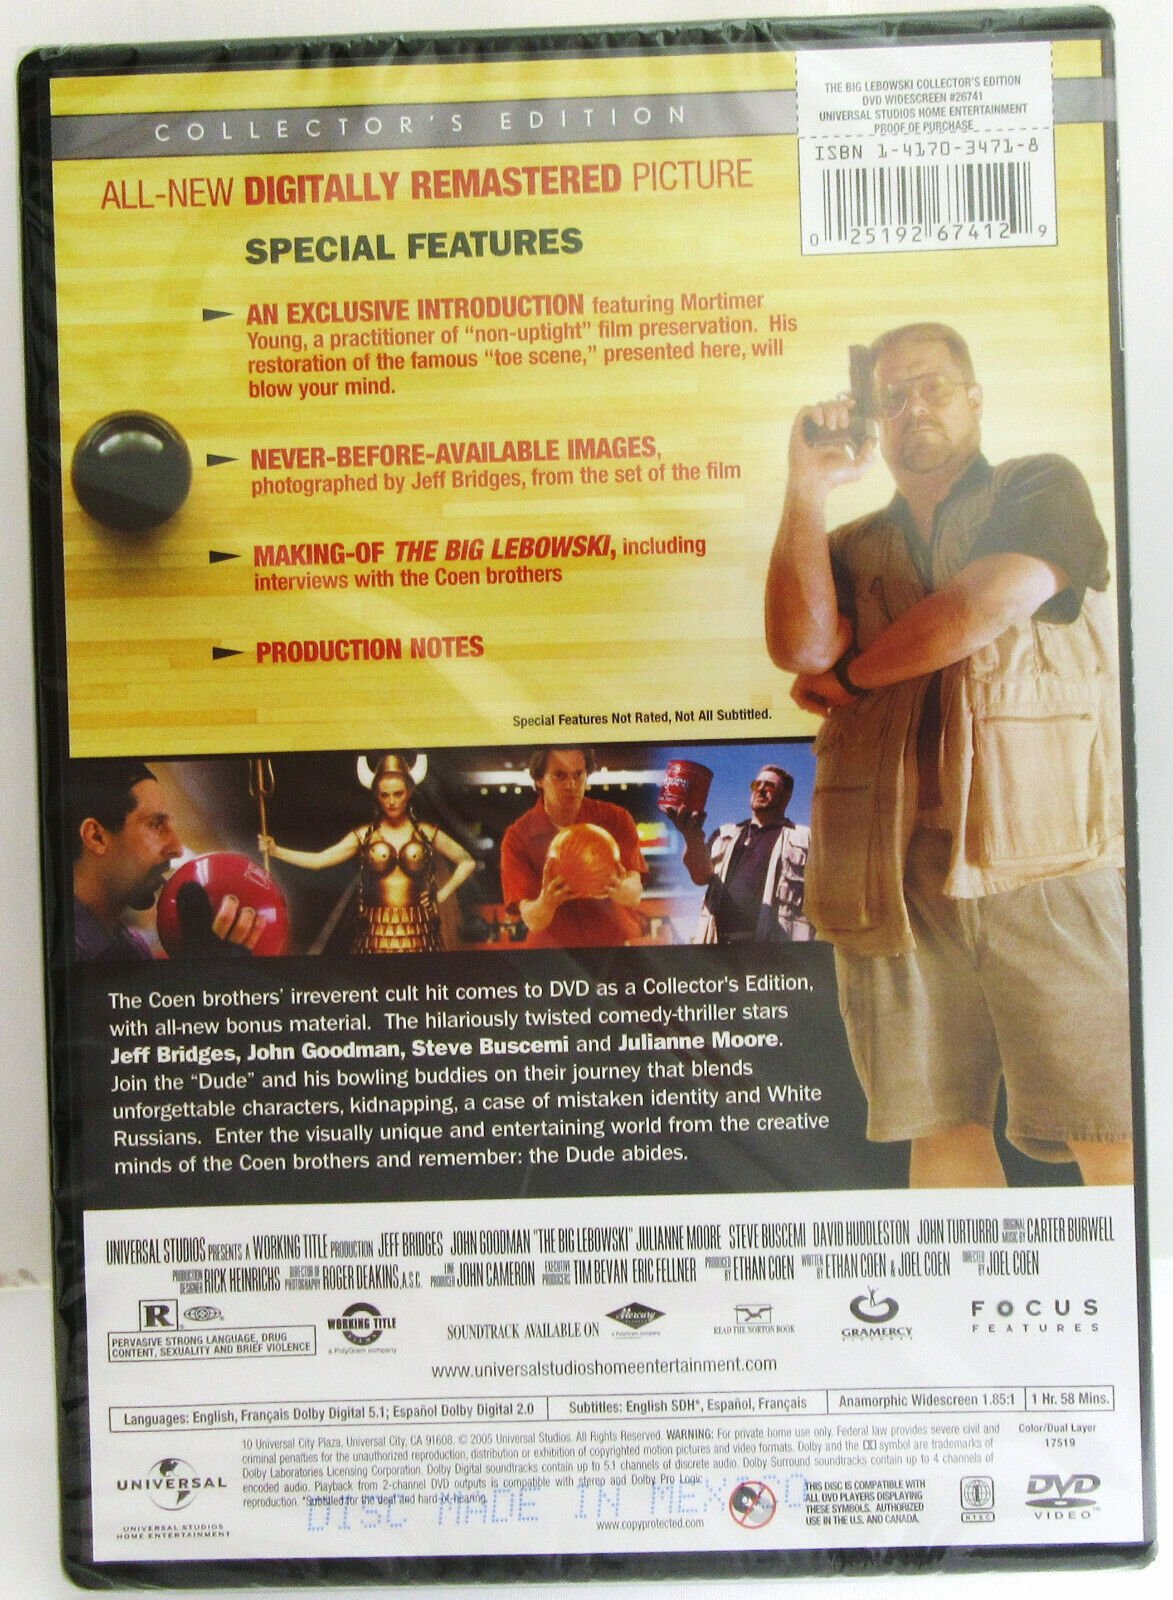 The Big Lebowski ~ Jeff Bridges, John Goodman (1998) ~ Movie ~ New DVD